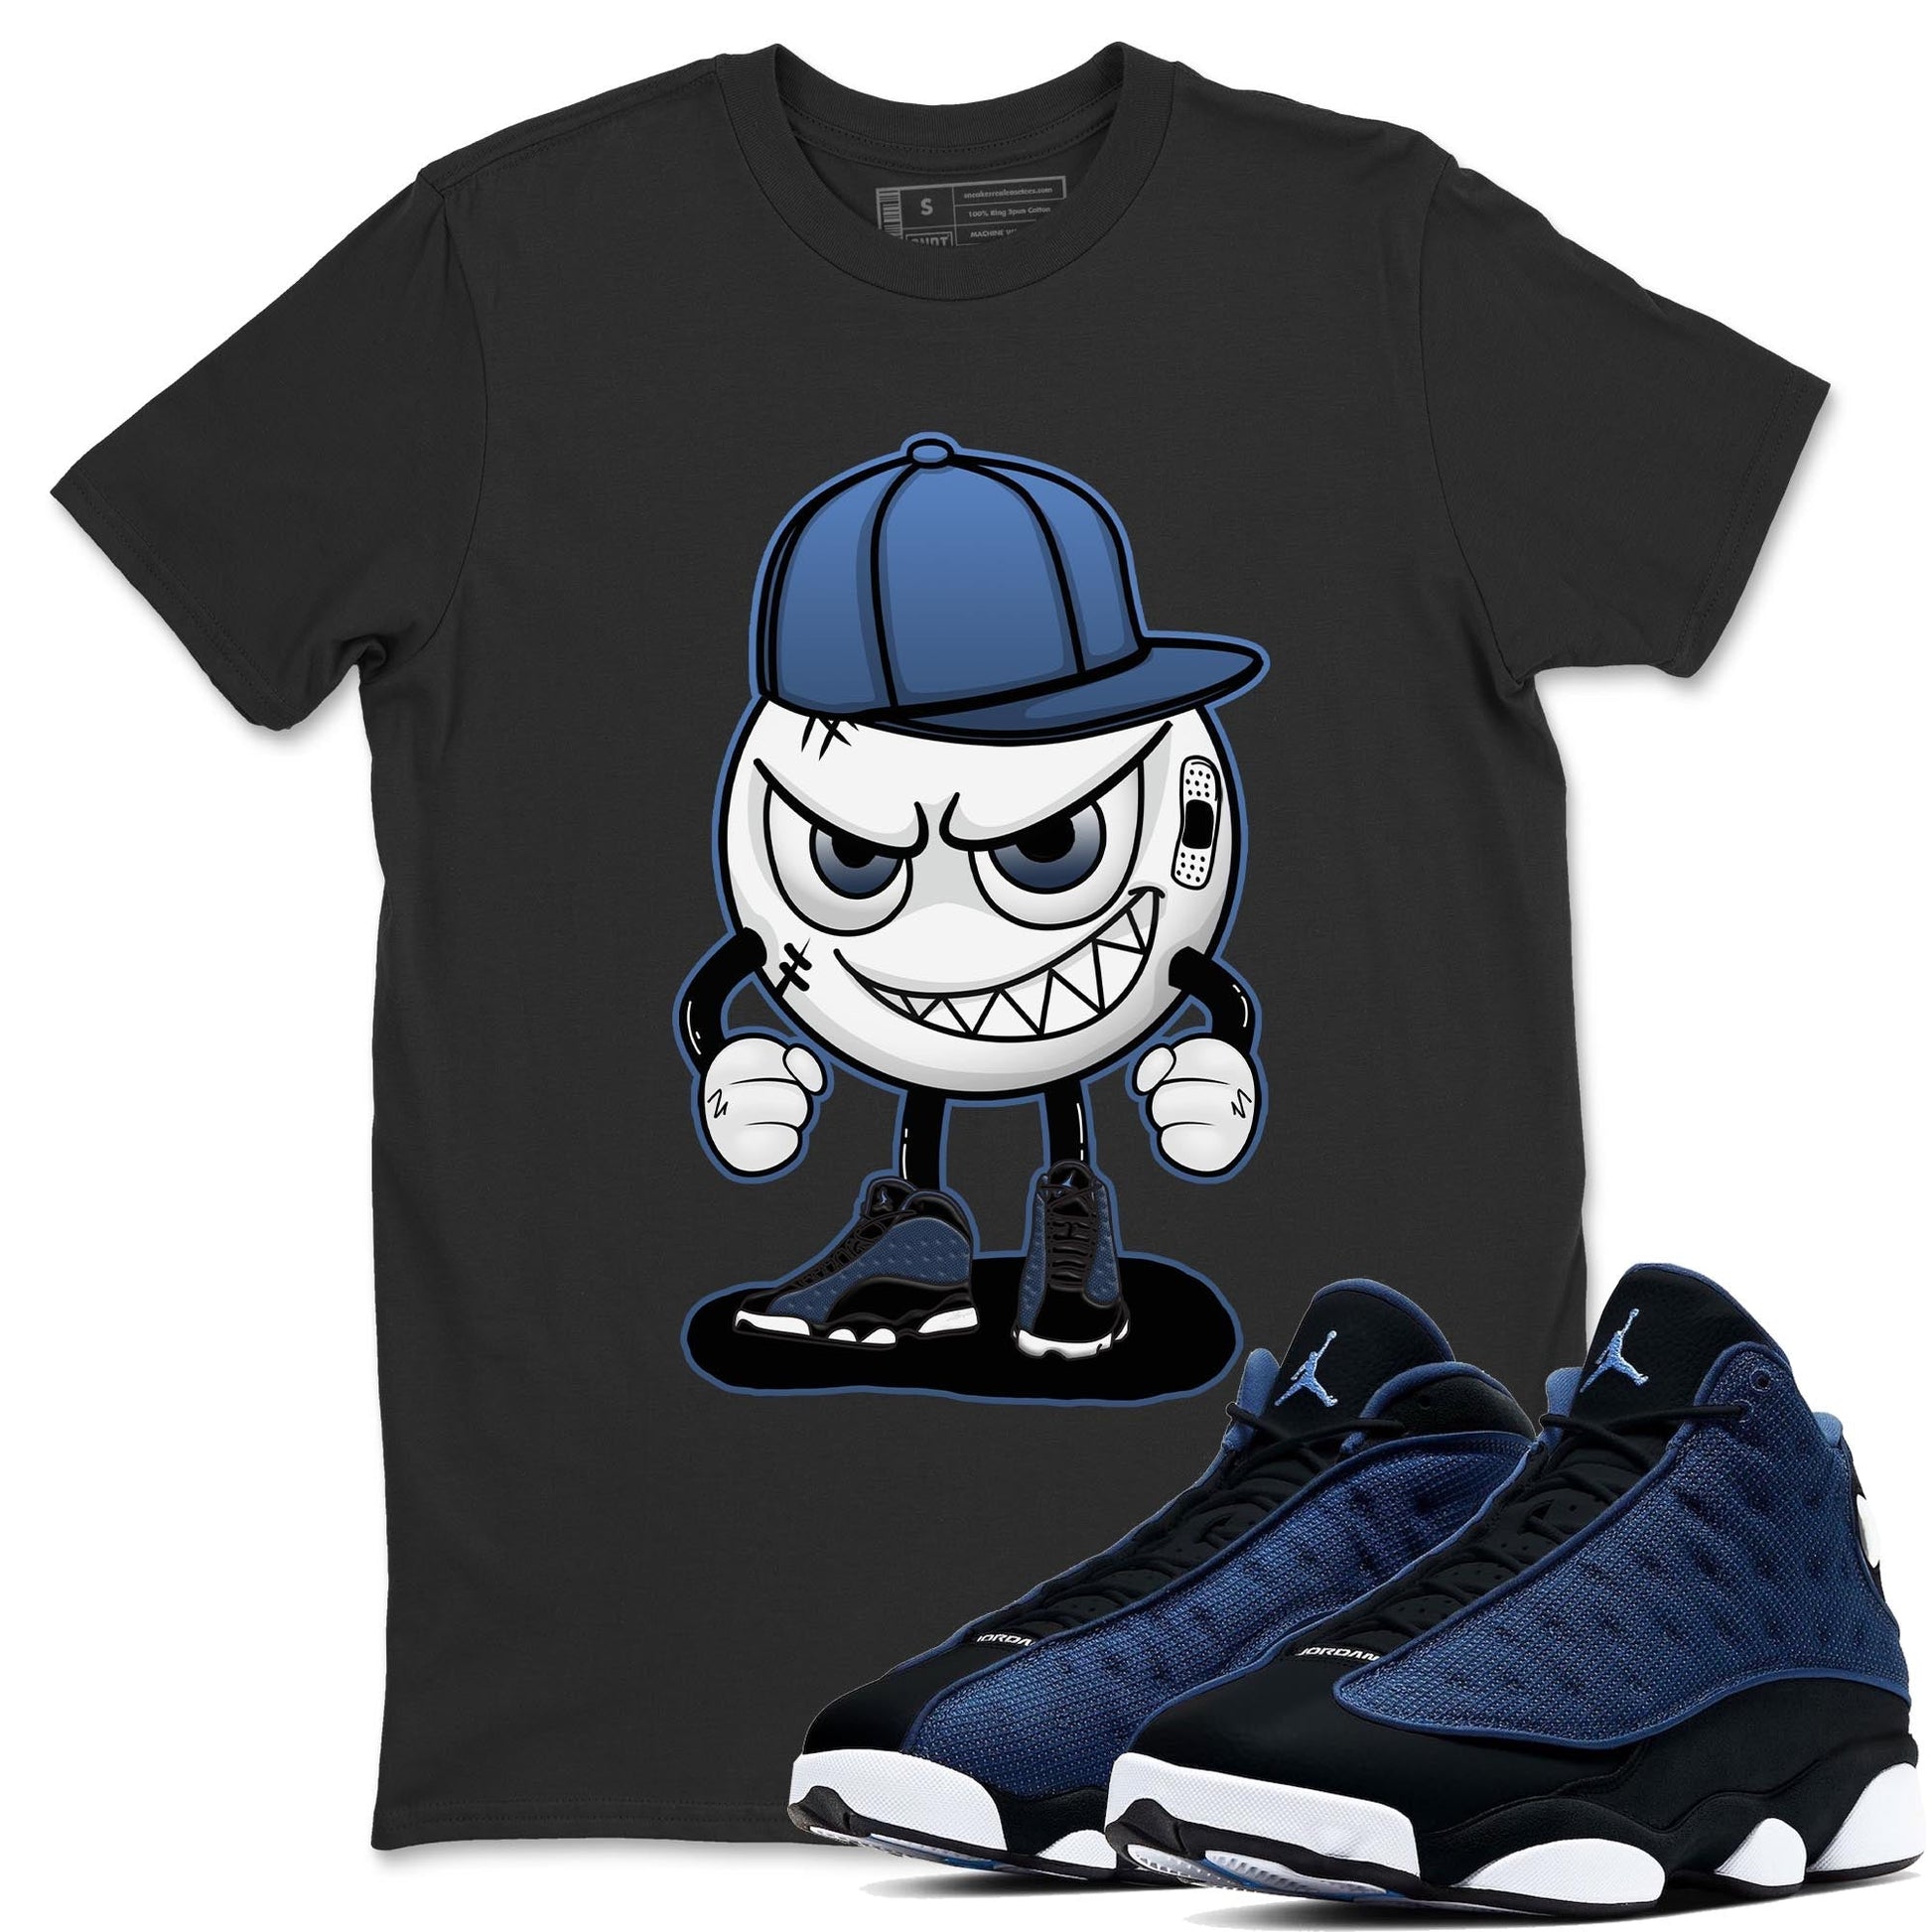 Jordan 13 Brave Blue Sneaker Match Tees Mischief Emoji Sneaker Tees Jordan 13 Brave Blue Sneaker Release Tees Unisex Shirts